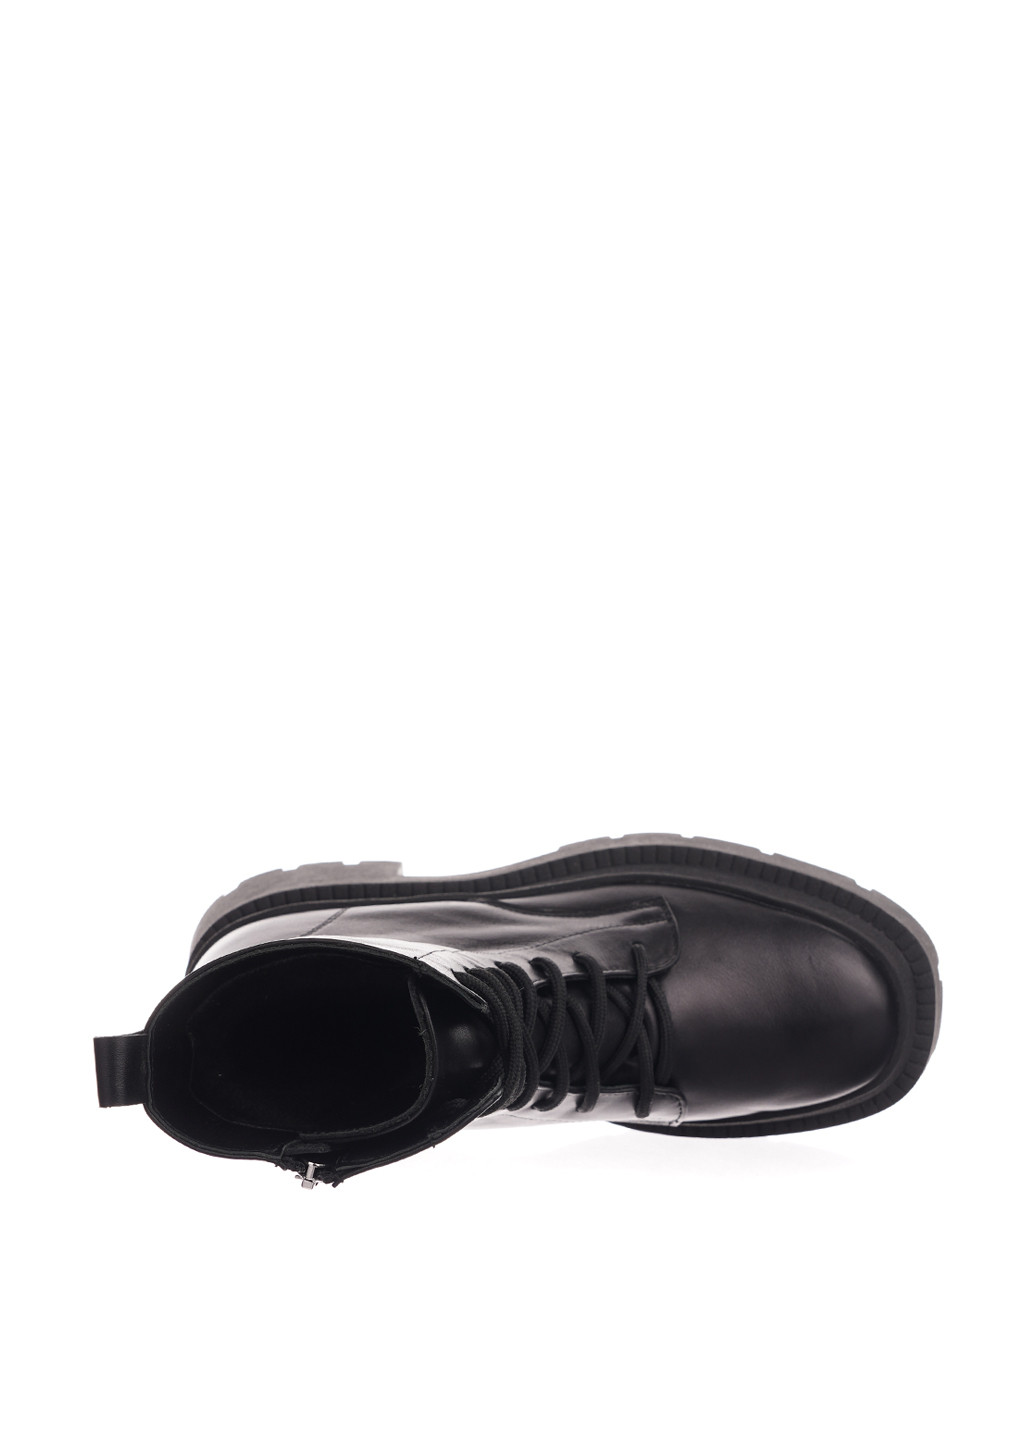 Зимние ботинки берцы Bizoni со шнуровкой